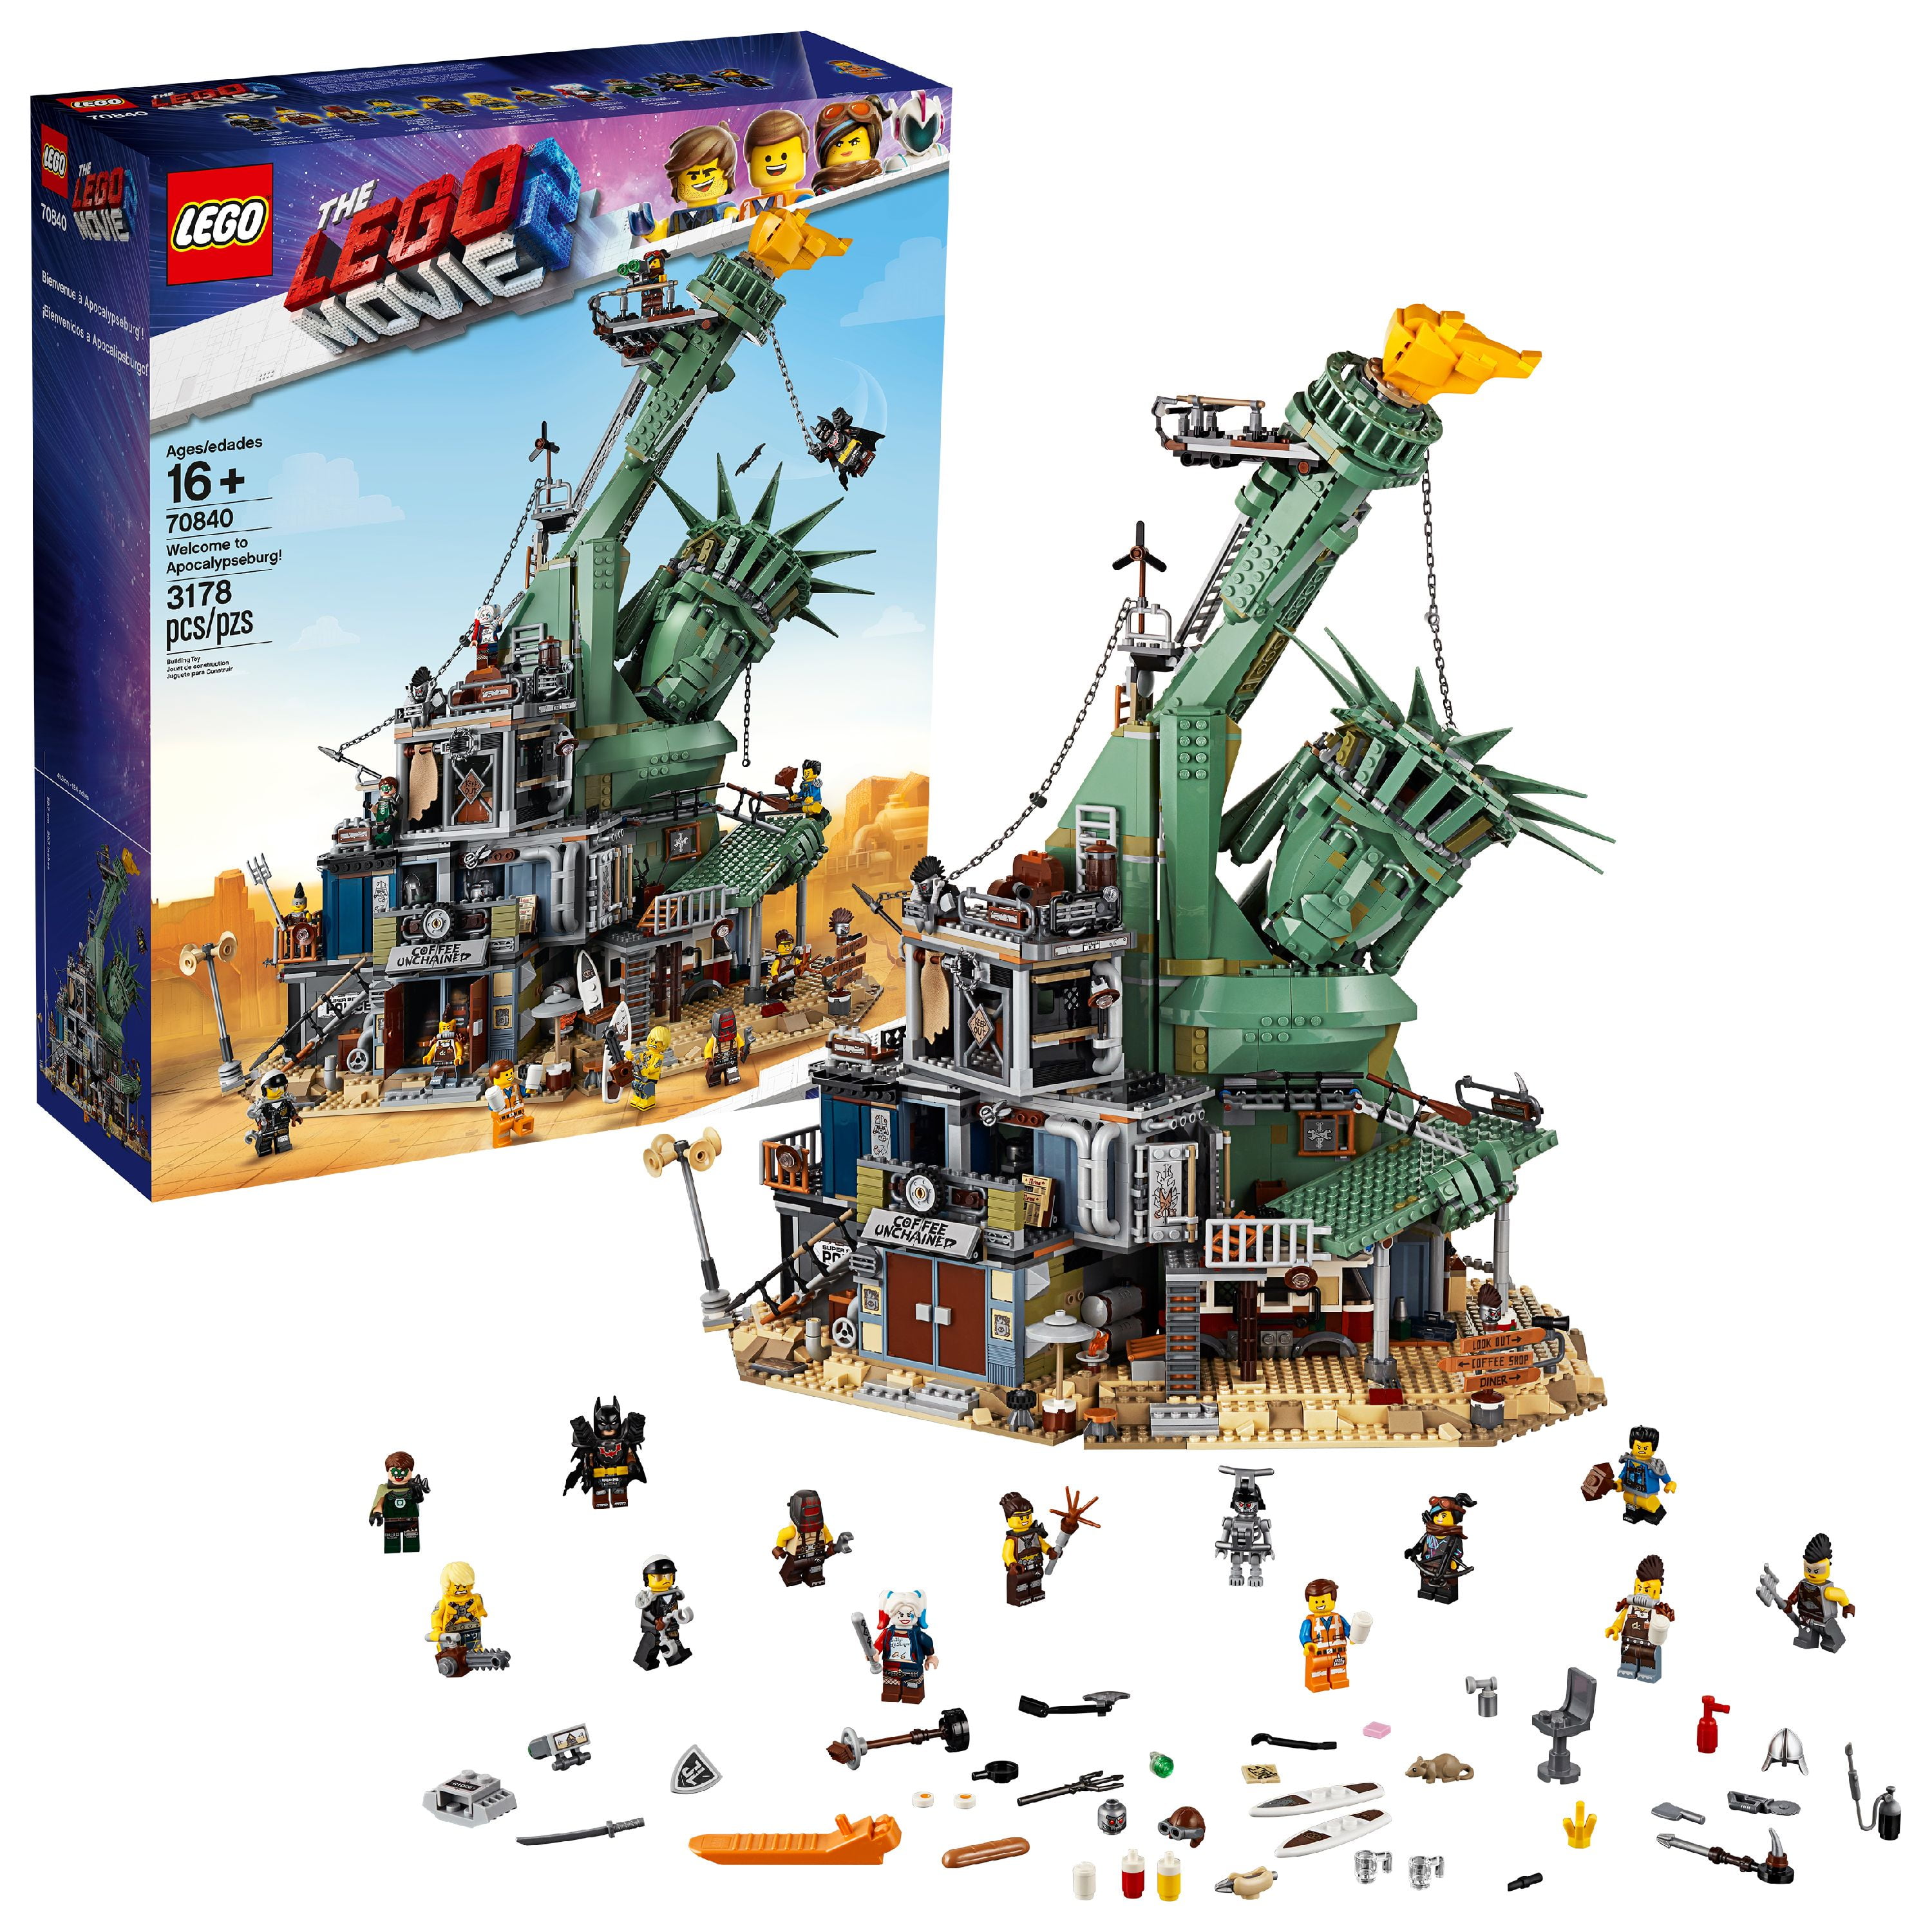 The LEGO 2 Welcome to Apocalypseburg! 70840